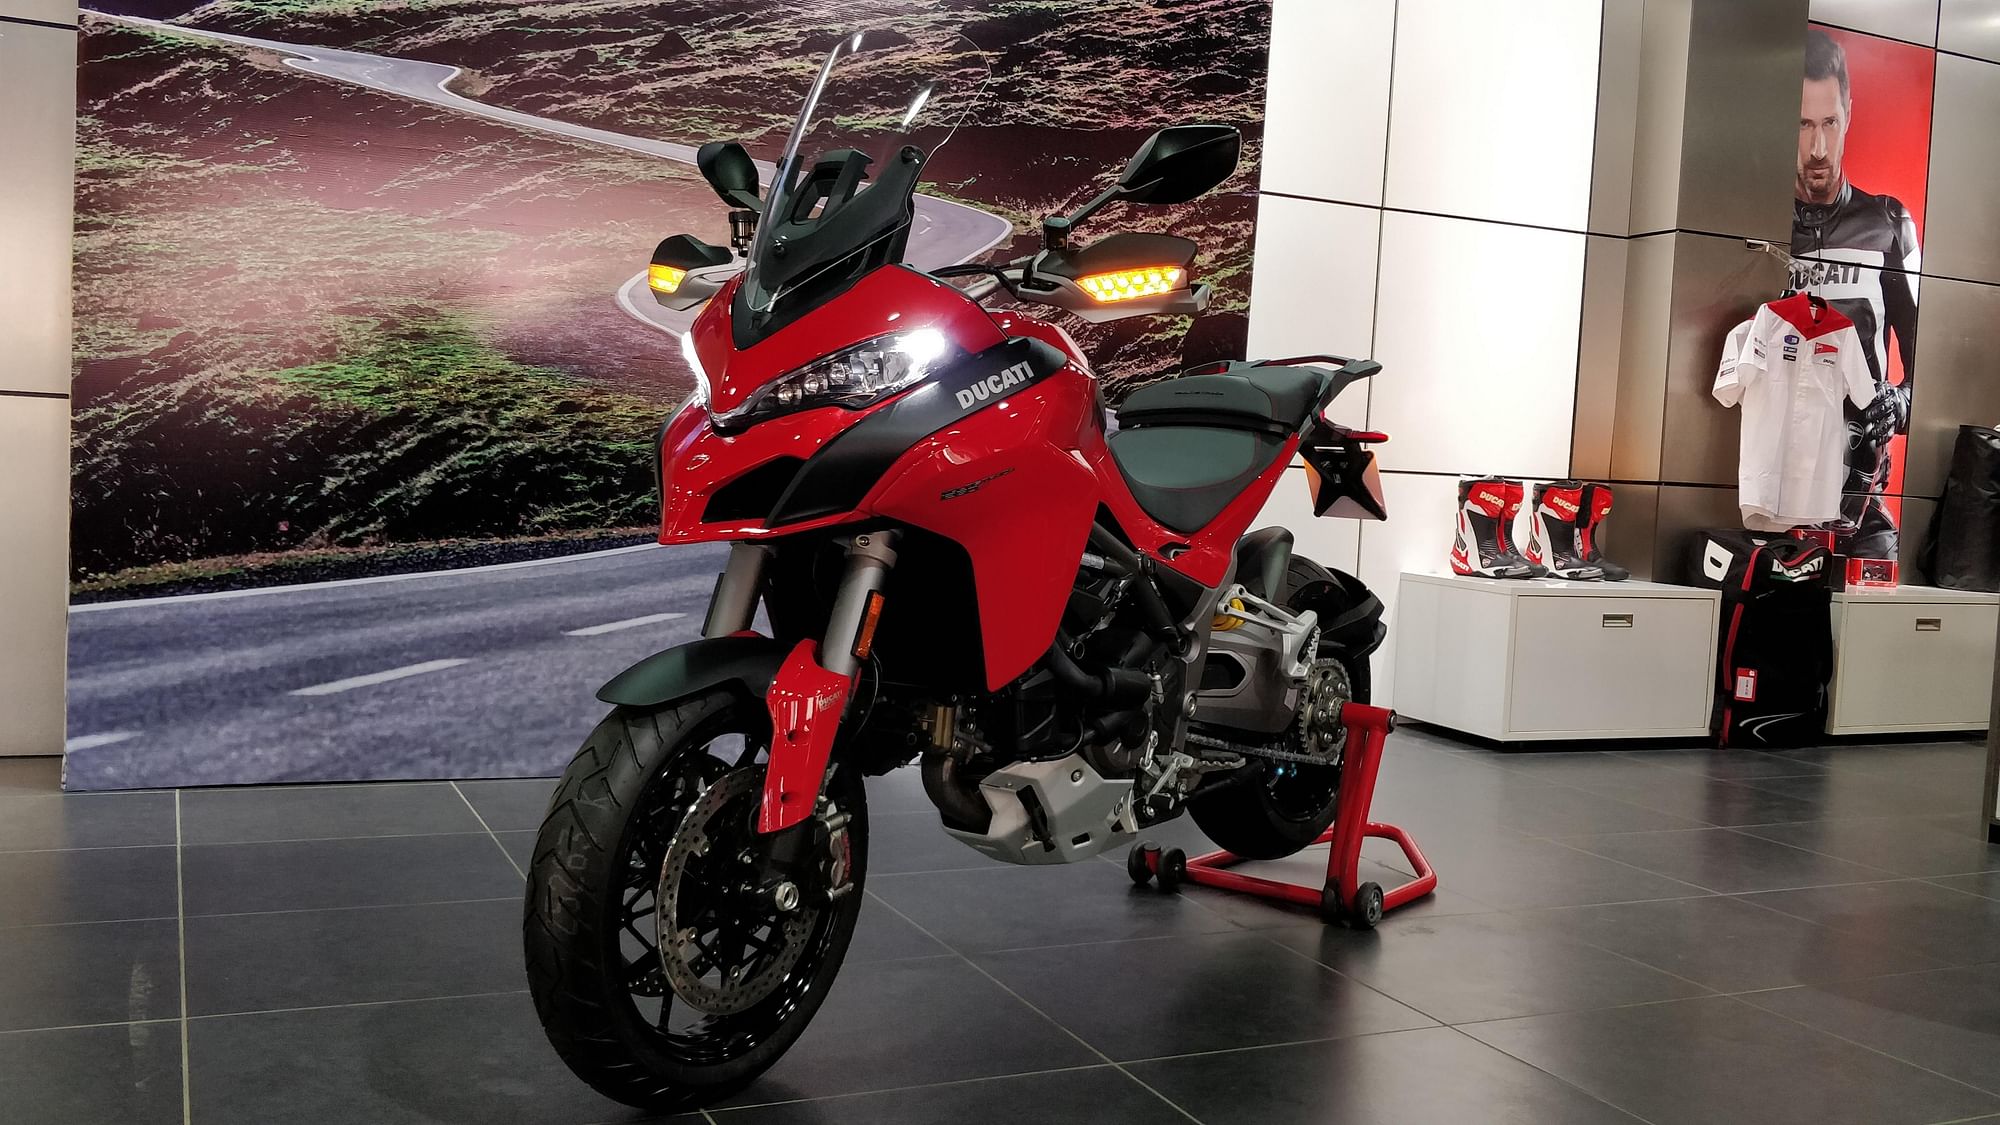 The new Ducati Multistrada 1,260 cc bike.&nbsp;